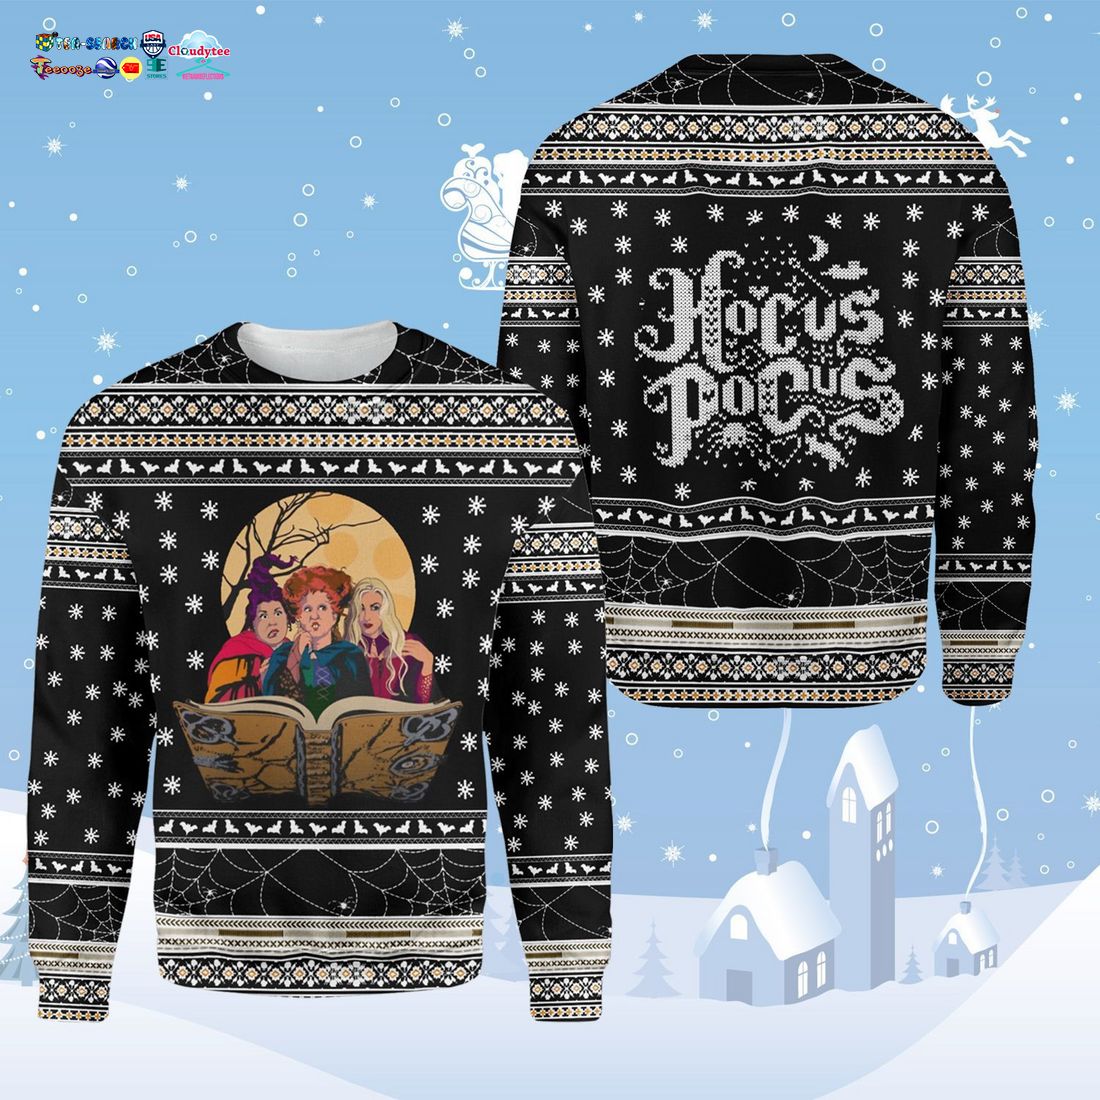 Hocus Pocus Ugly Christmas Sweater - Nice photo dude